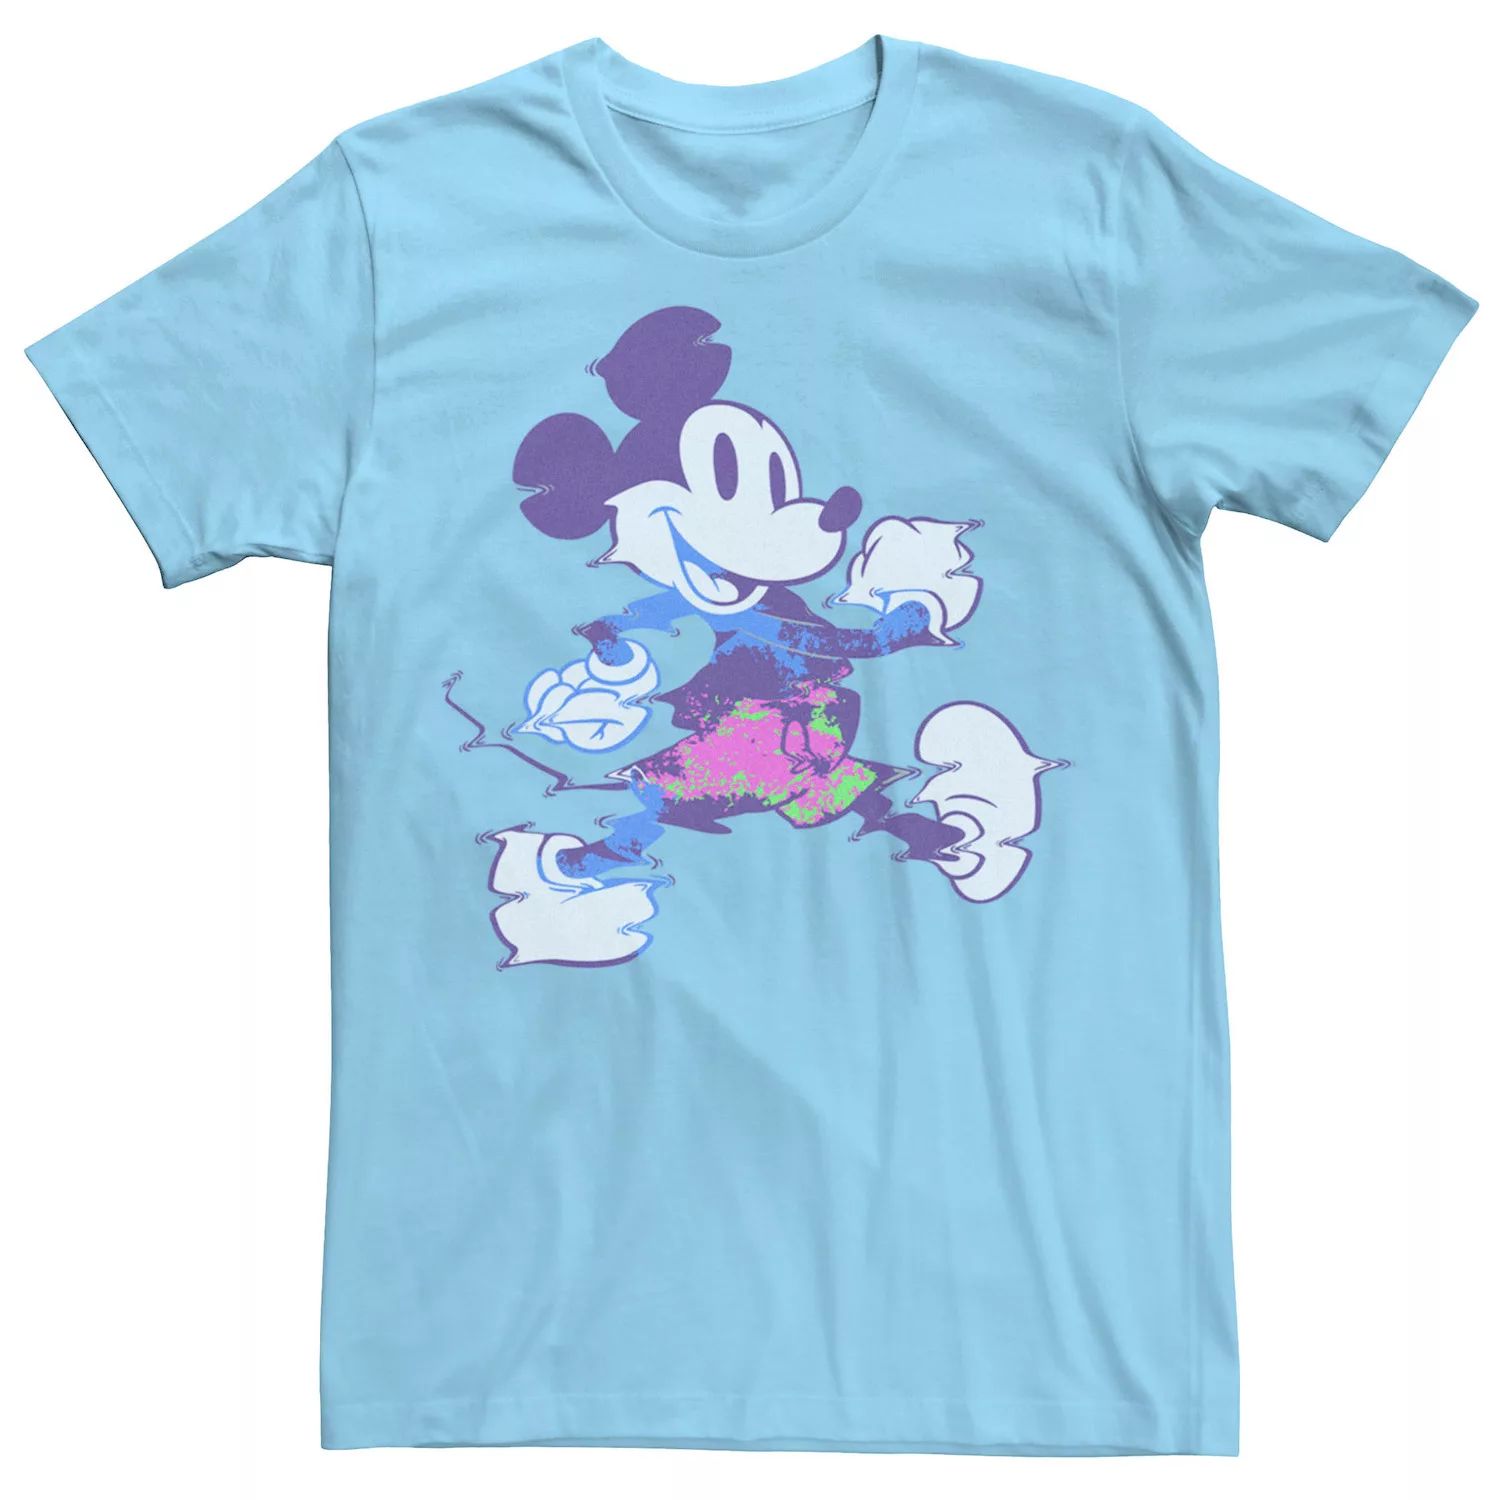 Мужская волнистая неоновая футболка с Микки Маусом Disney Licensed Character футболка с надписью я спросил с предложением помолвки с микки маусом от disney licensed character